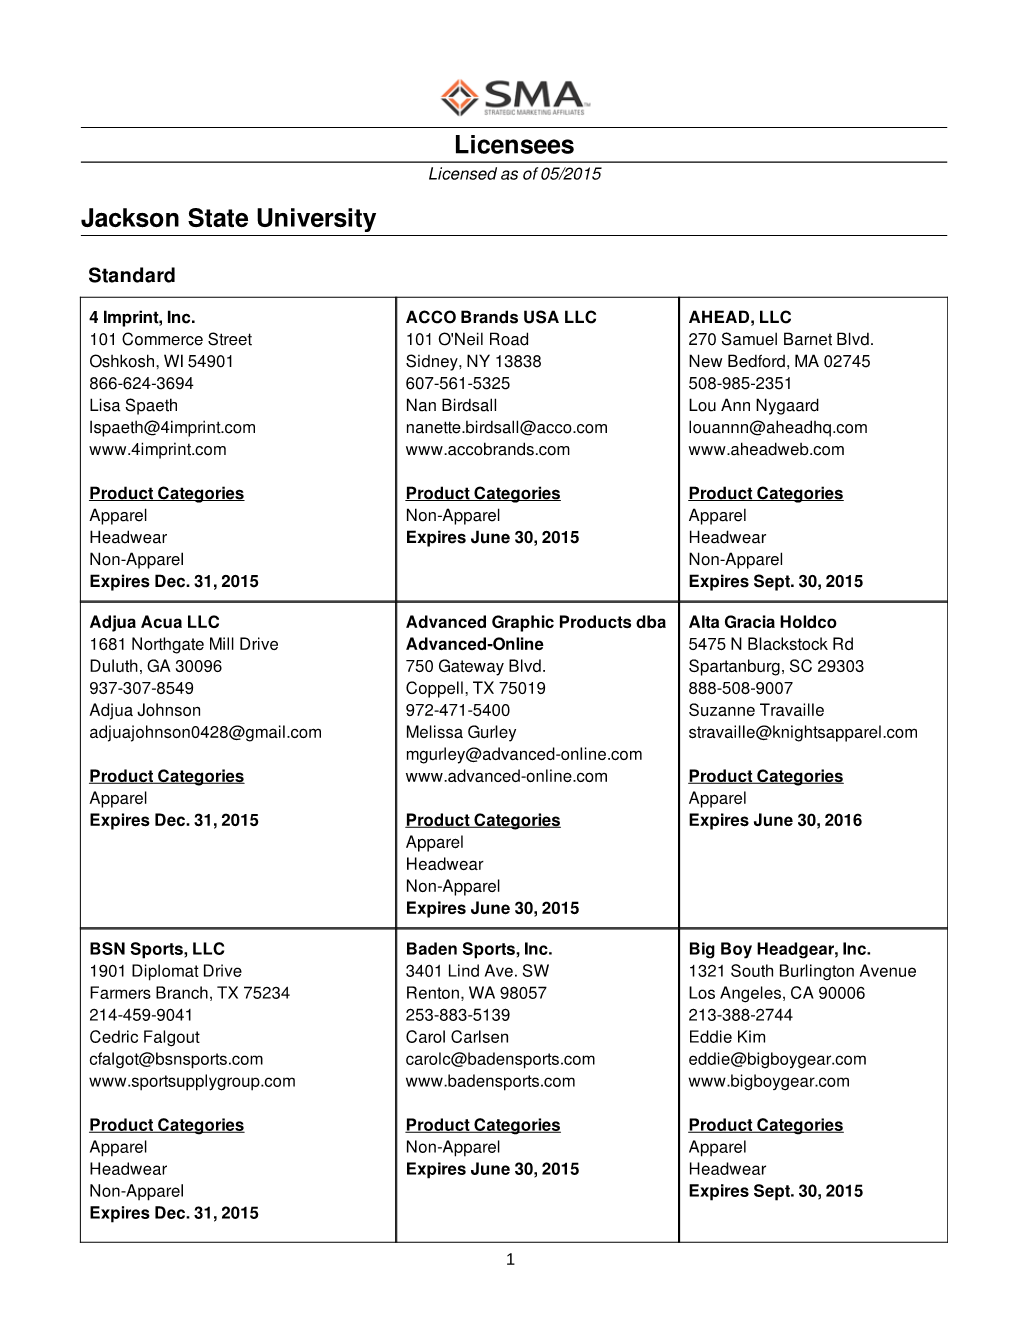 Jackson State University Licensees